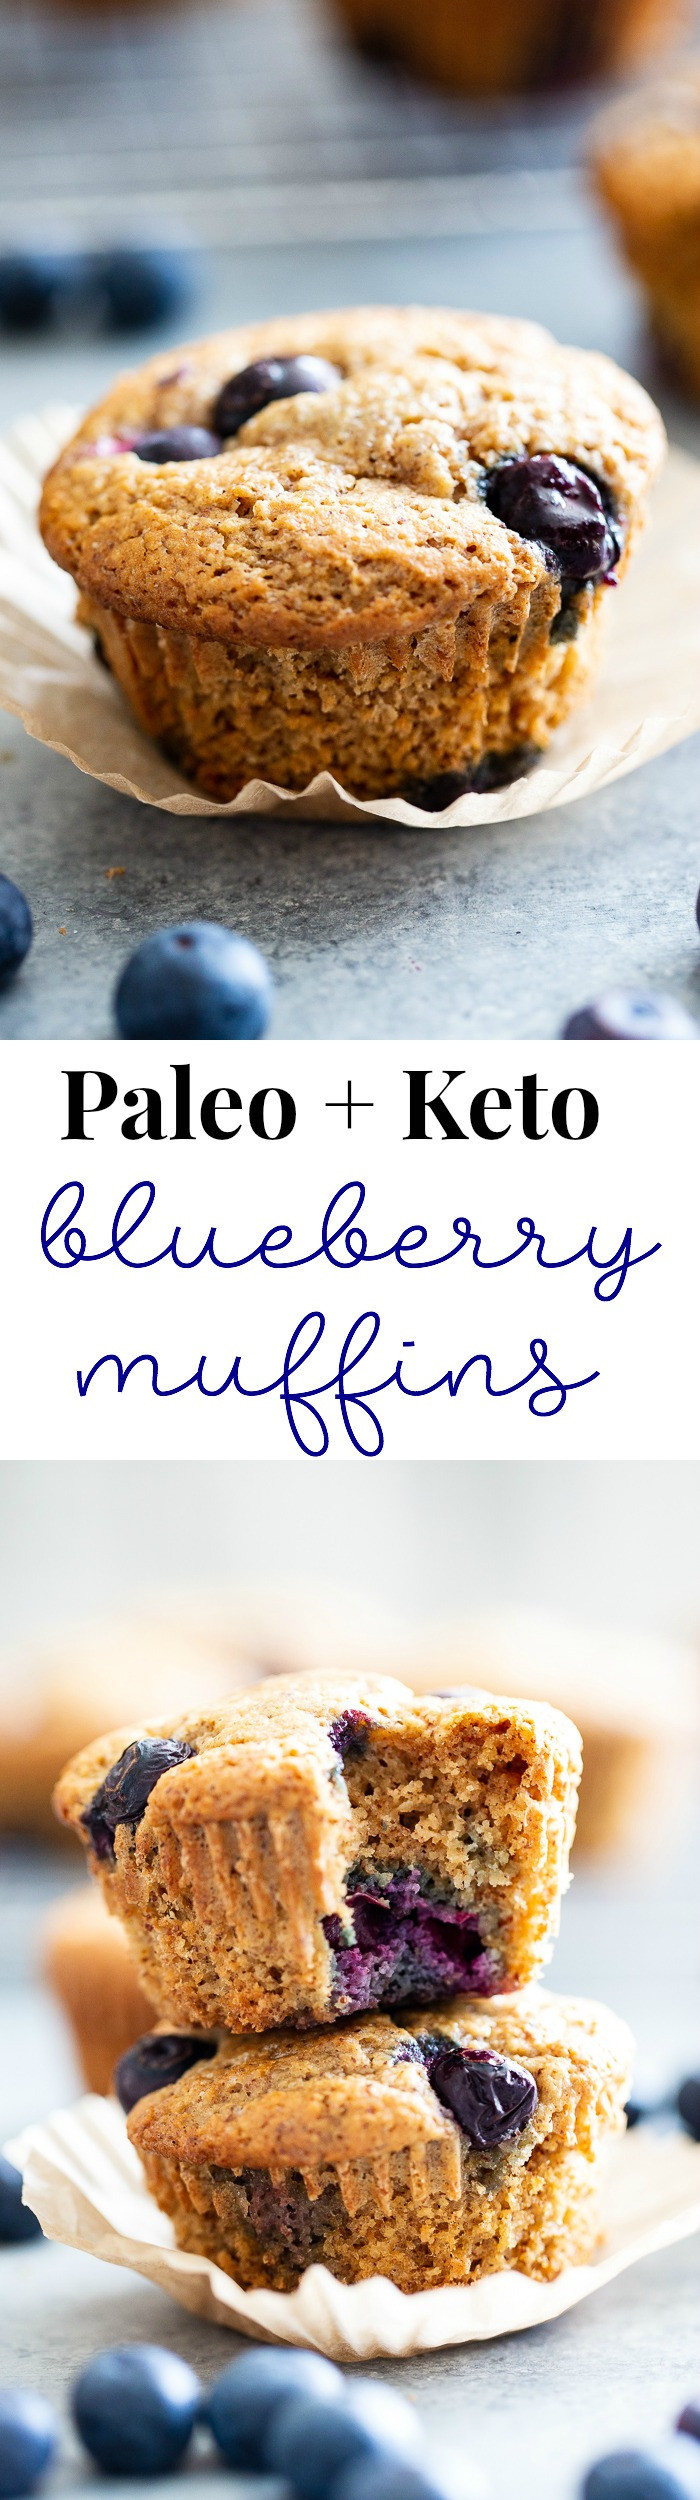 Dairy Free Keto Muffins
 e Bowl Keto Blueberry Muffins Paleo GF DF